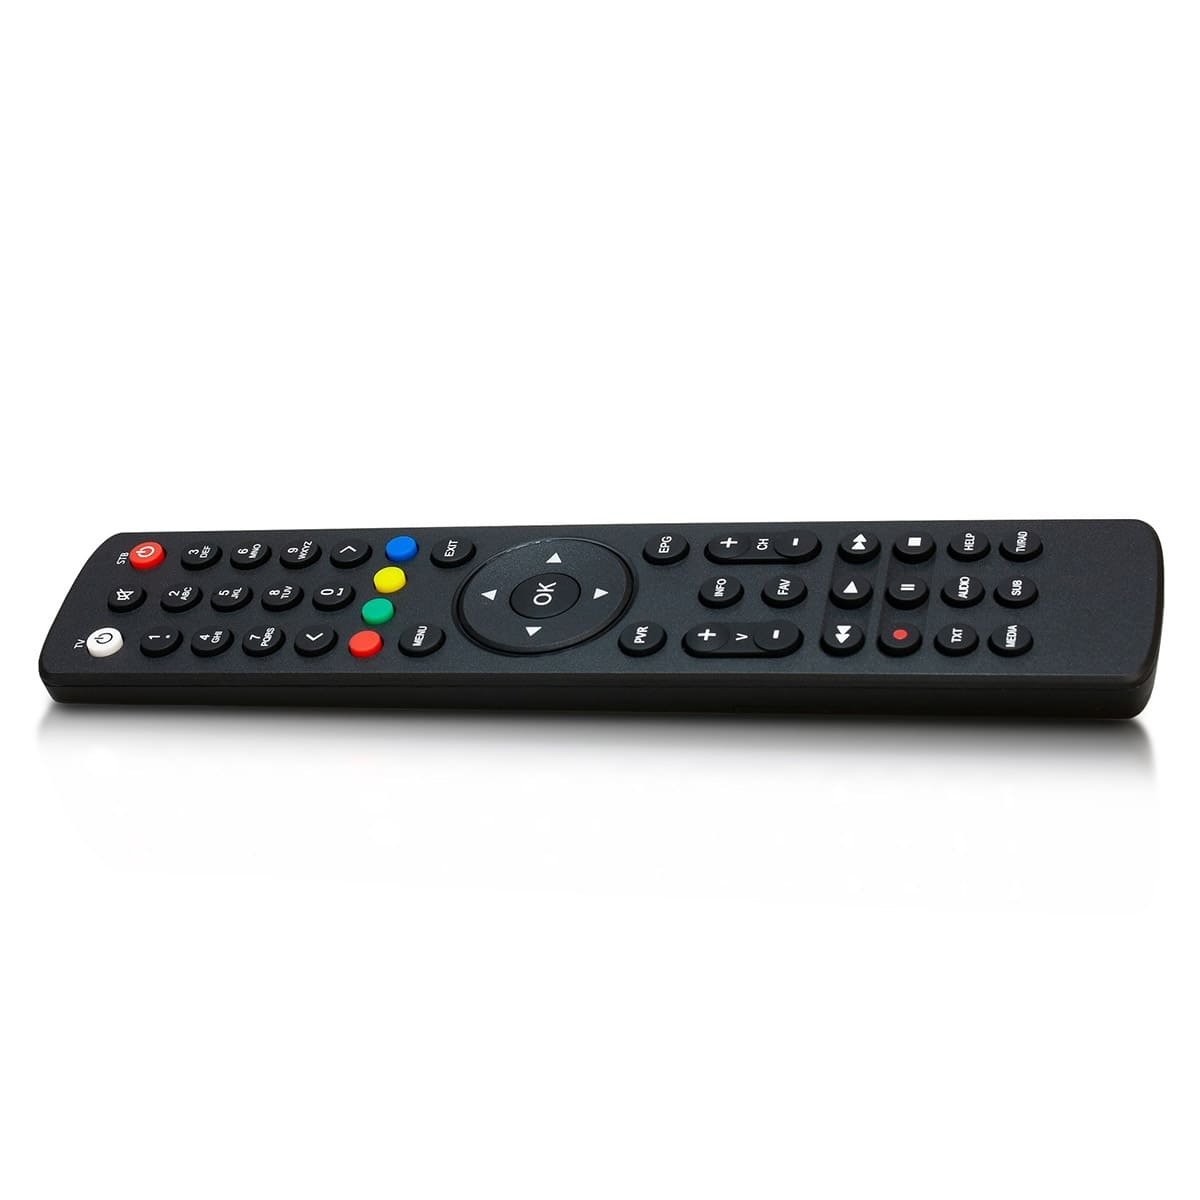 AB-COM CryptoBox 752HD Combo Sat-Receiver DVB-S2, (H.265), DVB-C, DVB-S, schwarz) PVR-Funktion=optional, (HDTV, DVB-T2